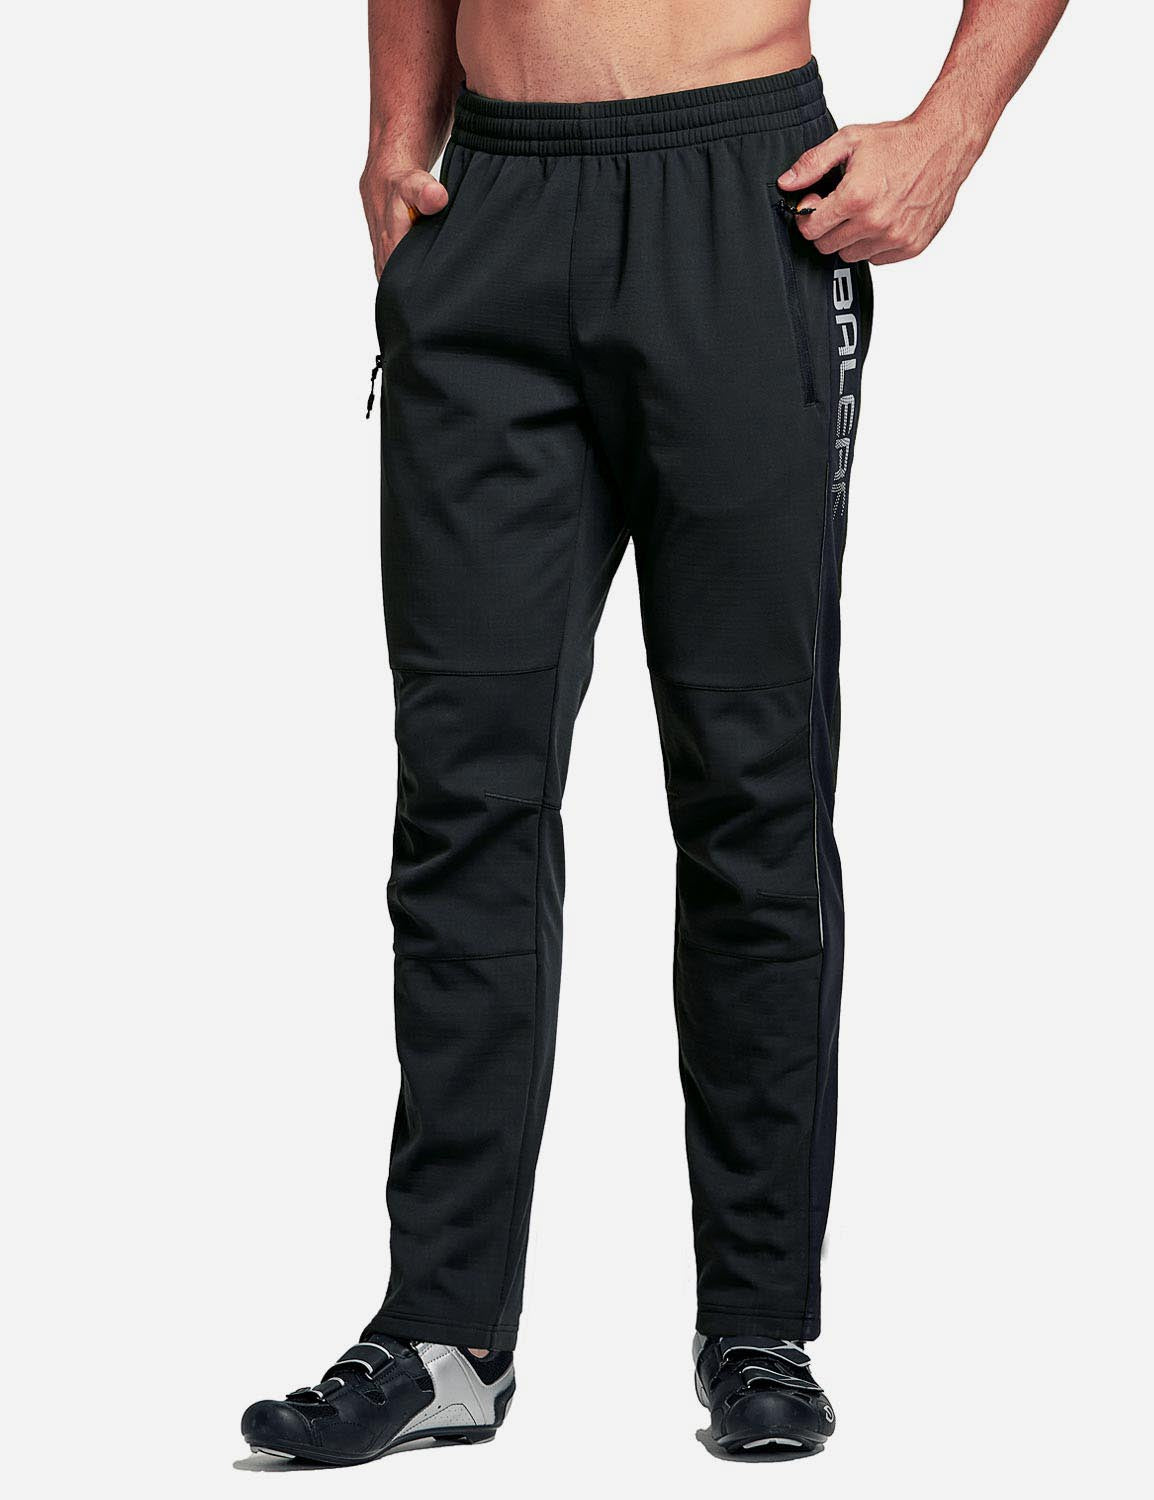 Baleaf Men's Thermal Fleece-Lined Windproof Pocketed Sweat Pants aai076 Black Front